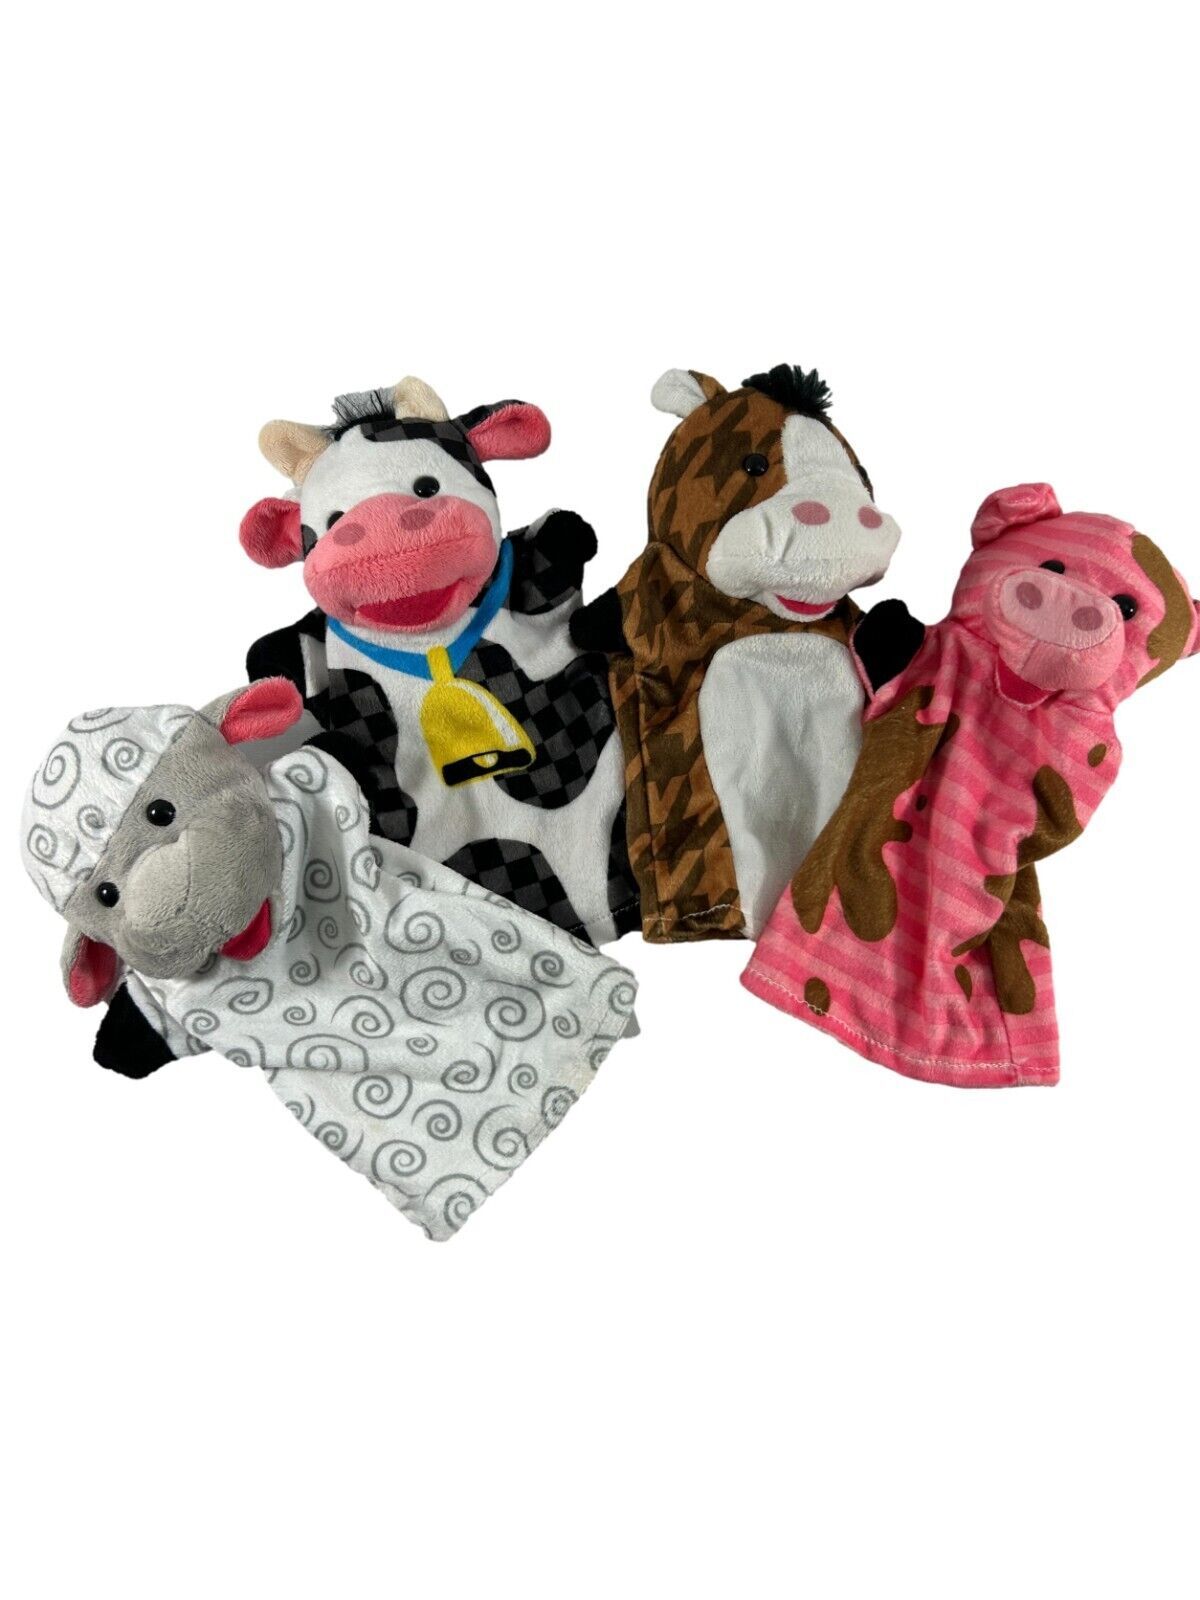 Melissa & Doug Farm Animals Hand Puppet Set of 4 Cow Pig Sheep Horse Soft Plush - $18.81